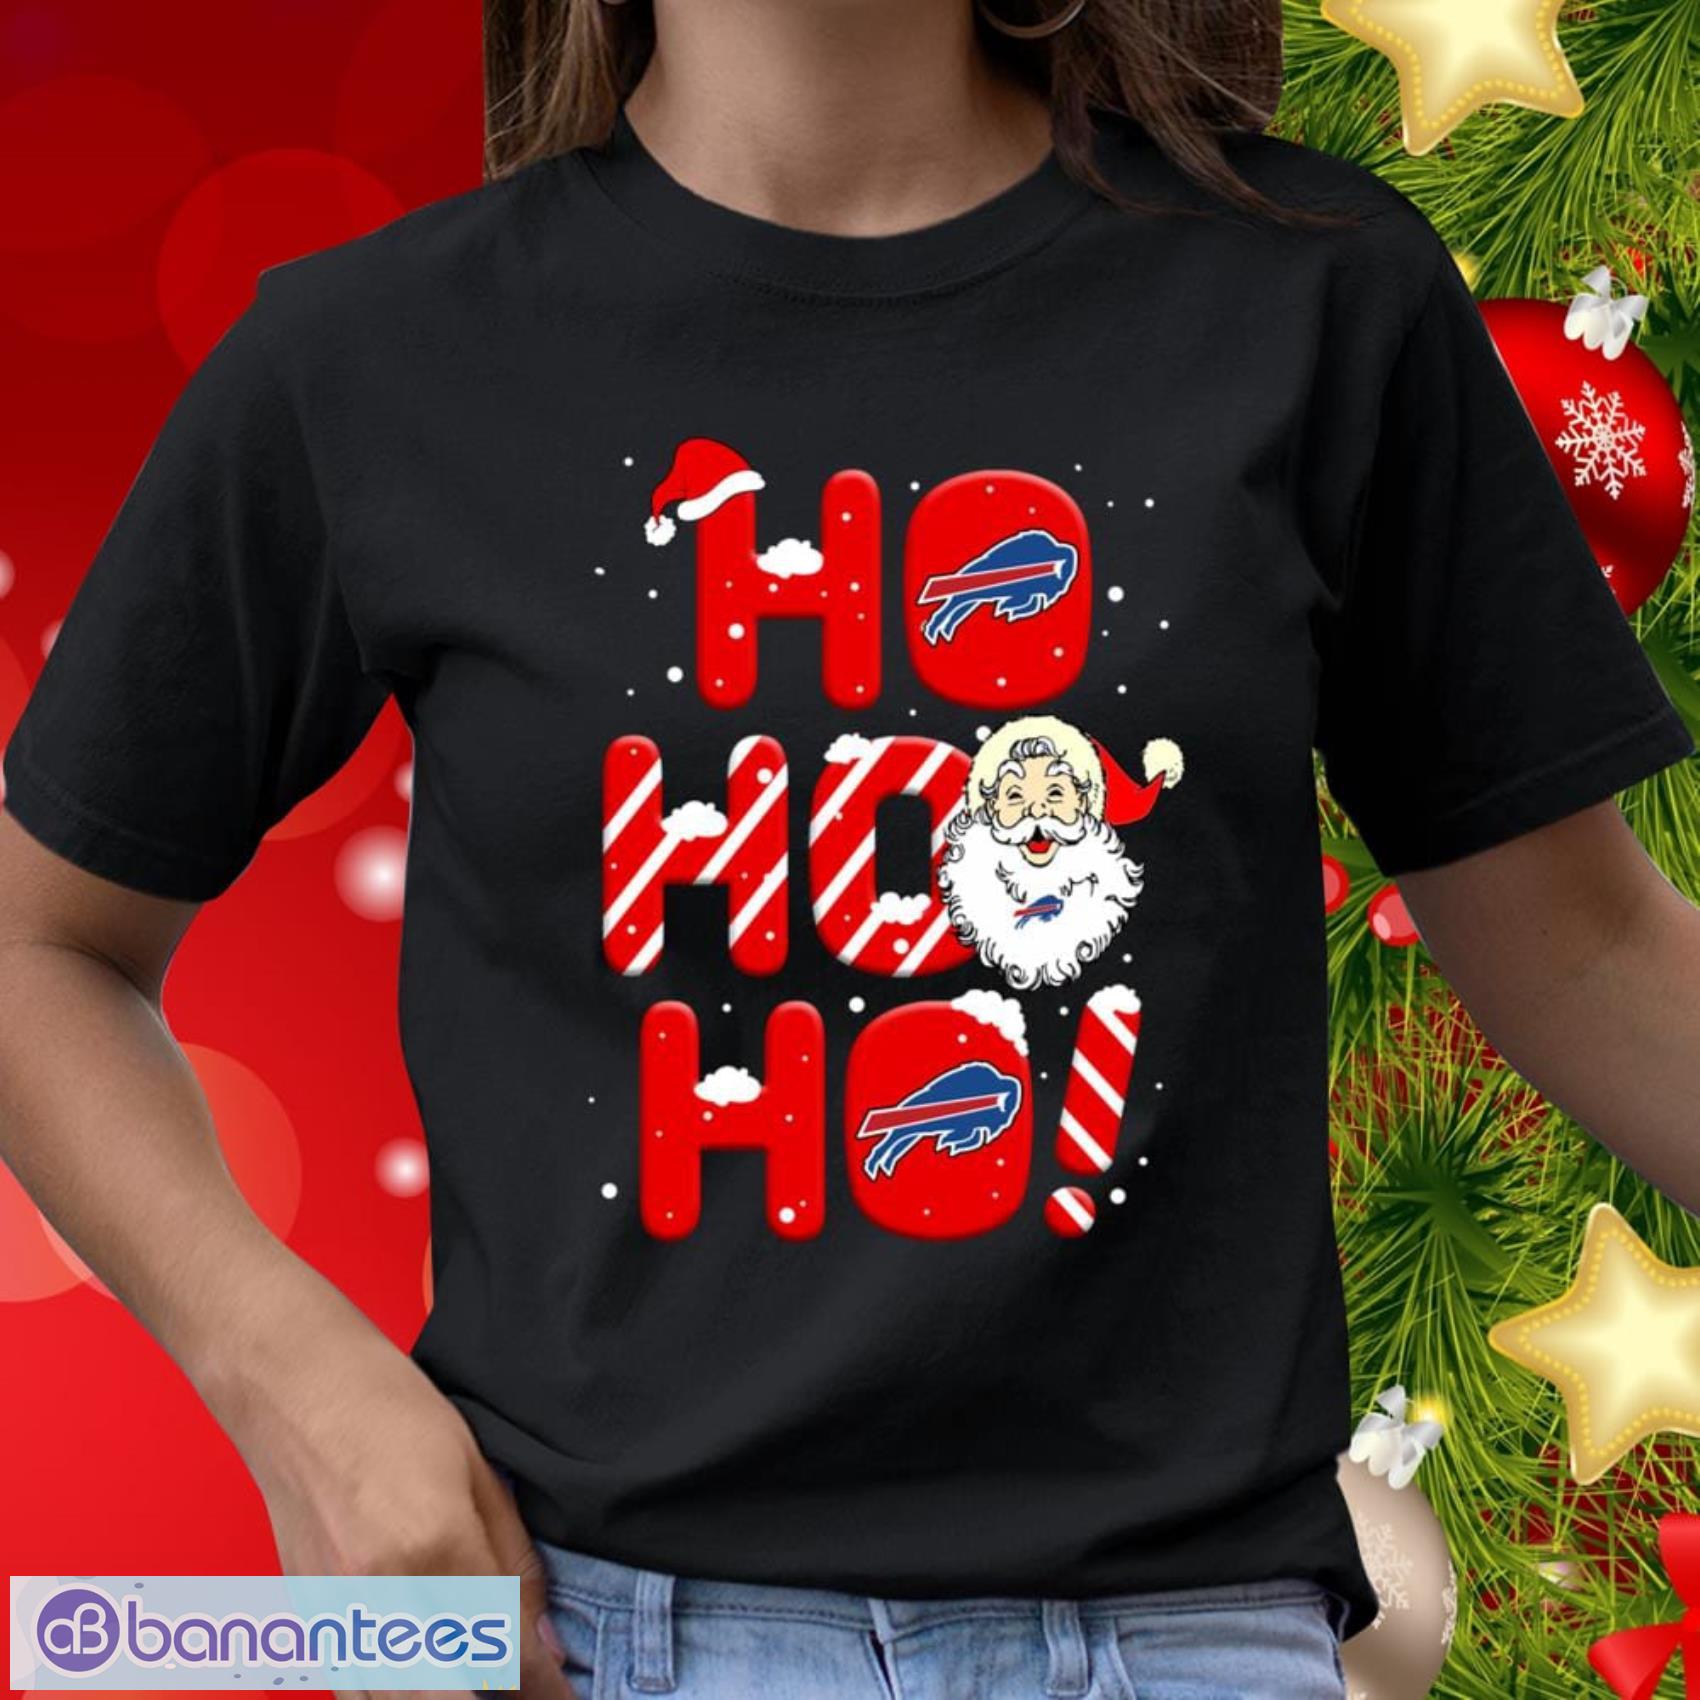 Buffalo Bills NFL Football Gift Fr Fans Ho Ho Ho Santa Claus Merry Christmas Shirt T Shirt - Buffalo Bills NFL Football Ho Ho Ho Santa Claus Merry Christmas Shirt T Shirt_2